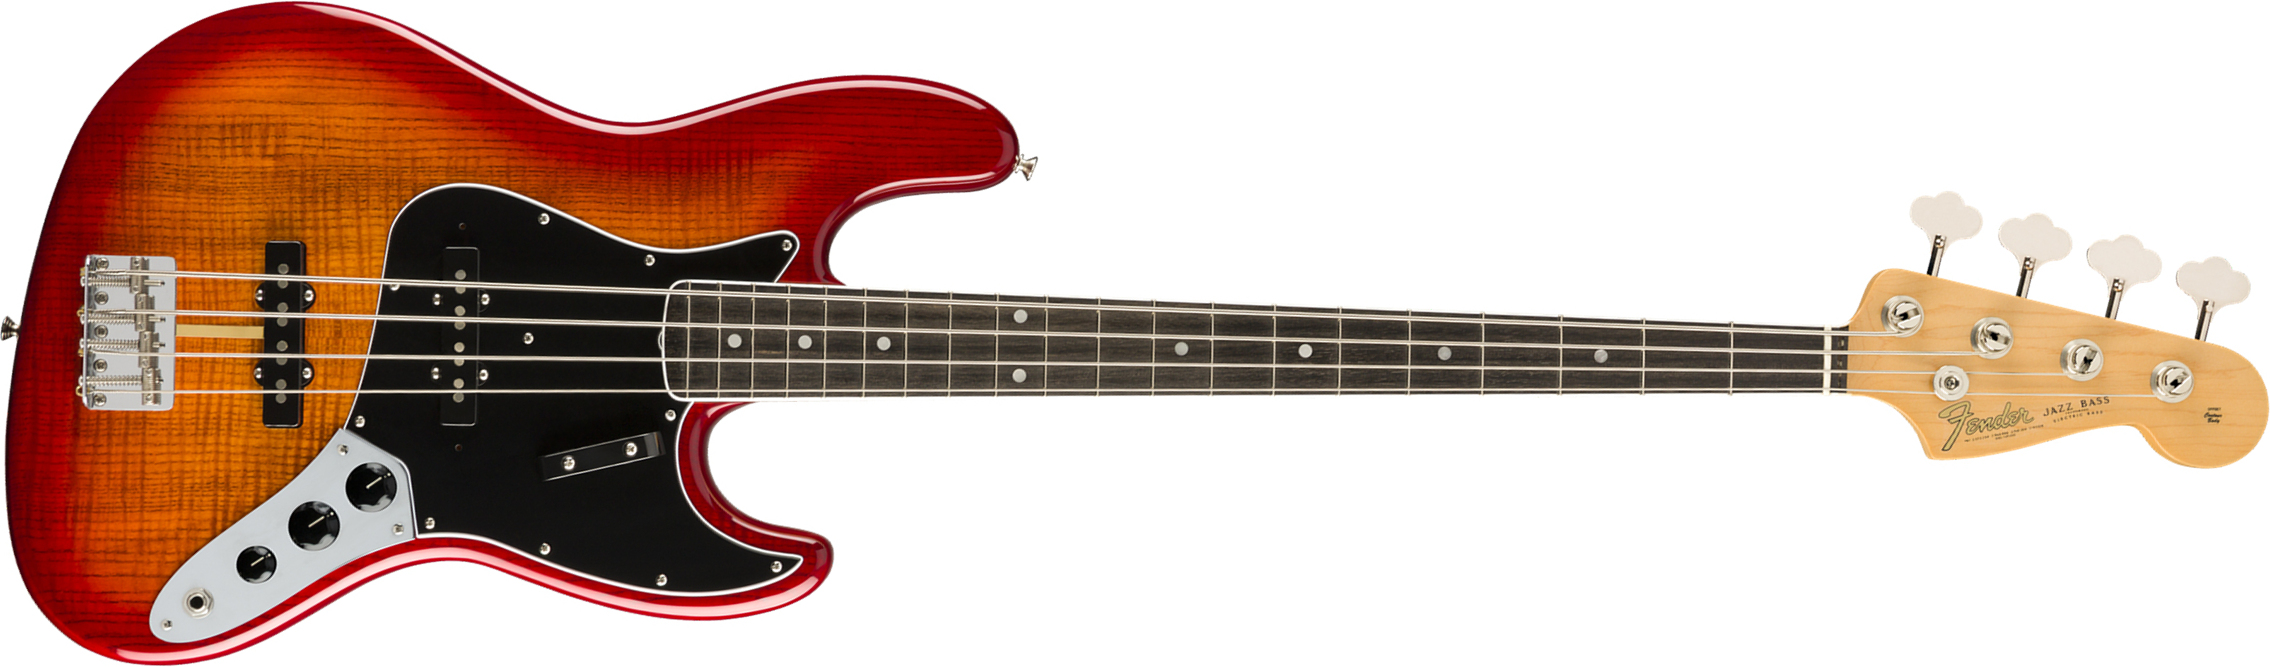 Fender Jazz Bass Flame Ash Top Rarities Usa Eb - Plasma Red Burst - Basse Électrique Solid Body - Main picture